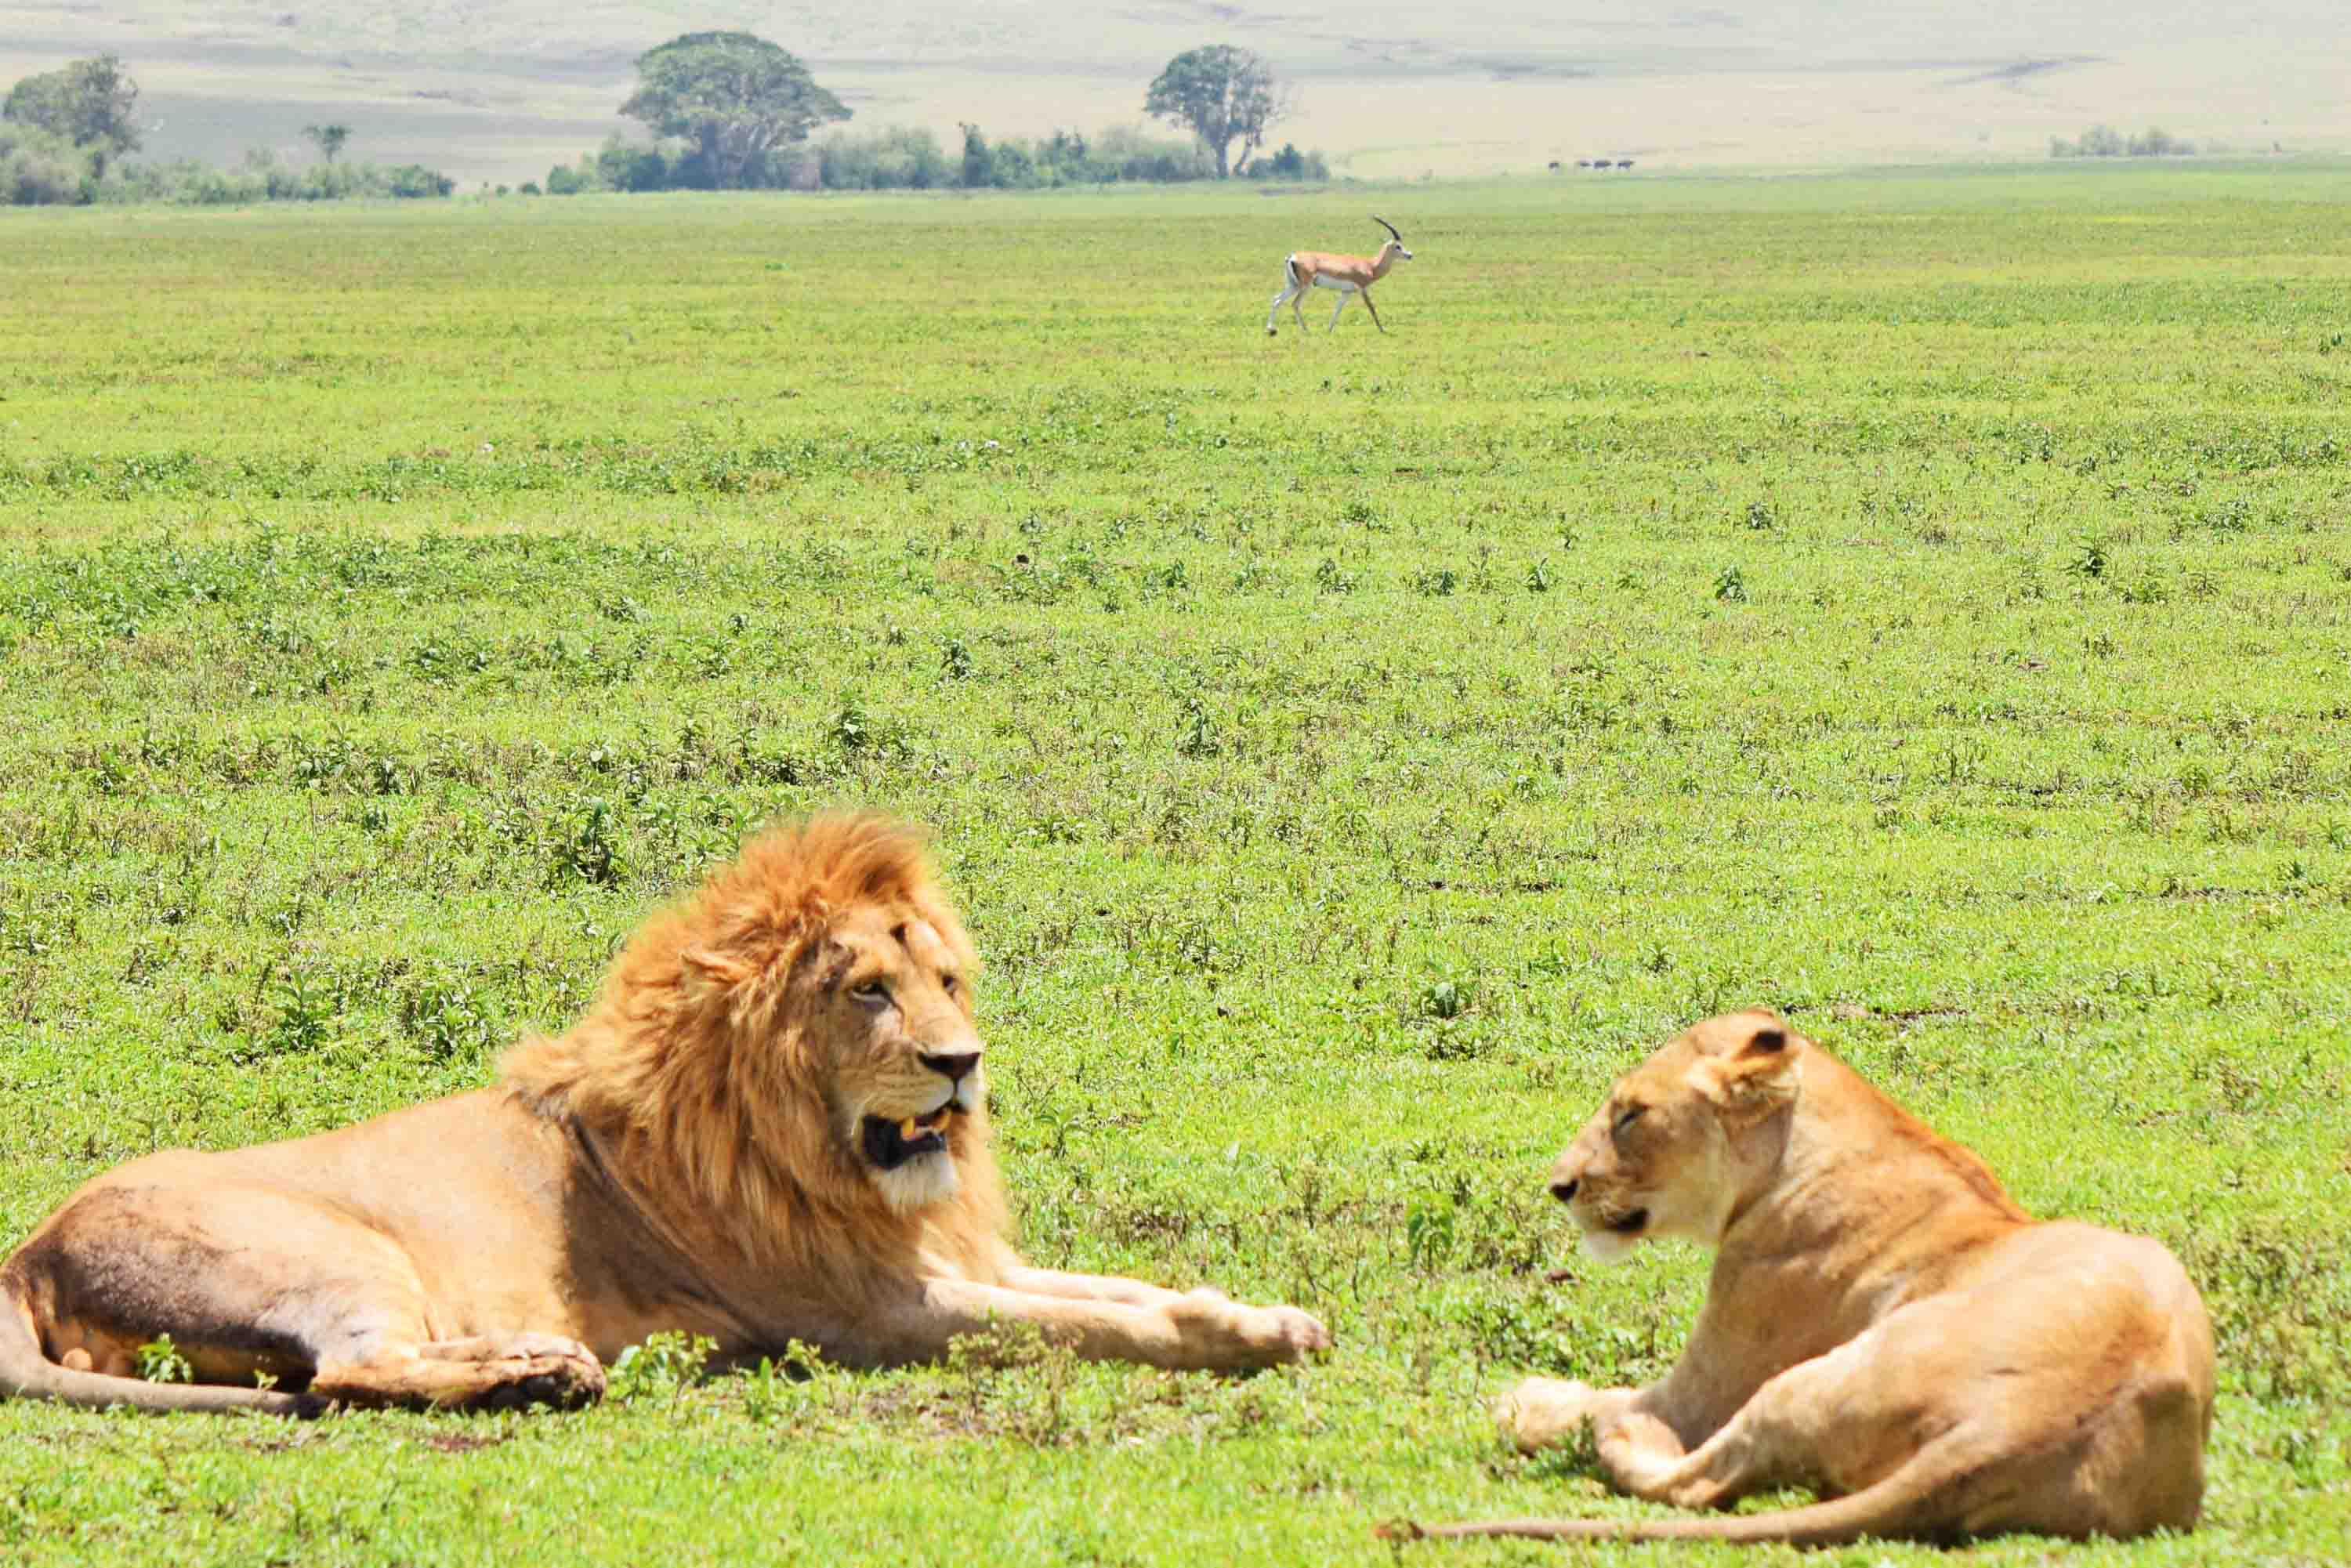 Ngorongoro Crater Lodge andBeyond Tanzania - Safari na Cratera de Ngorongoro